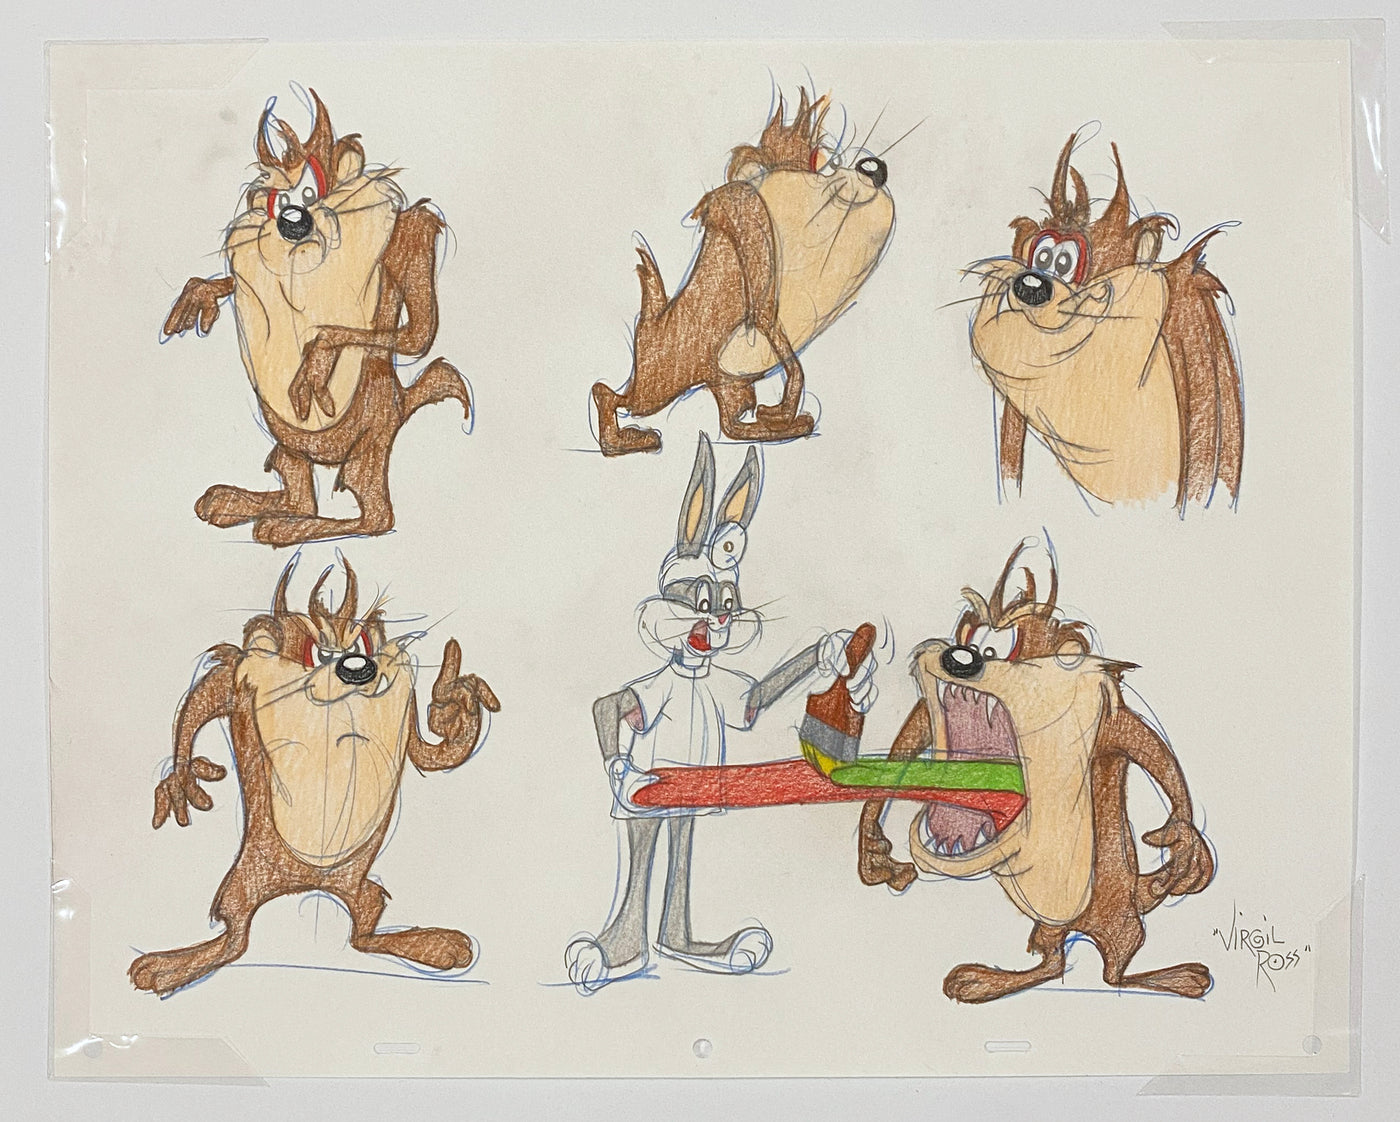 Original Warner Brothers Virgil Ross Model Sheet Animation Drawing fea –